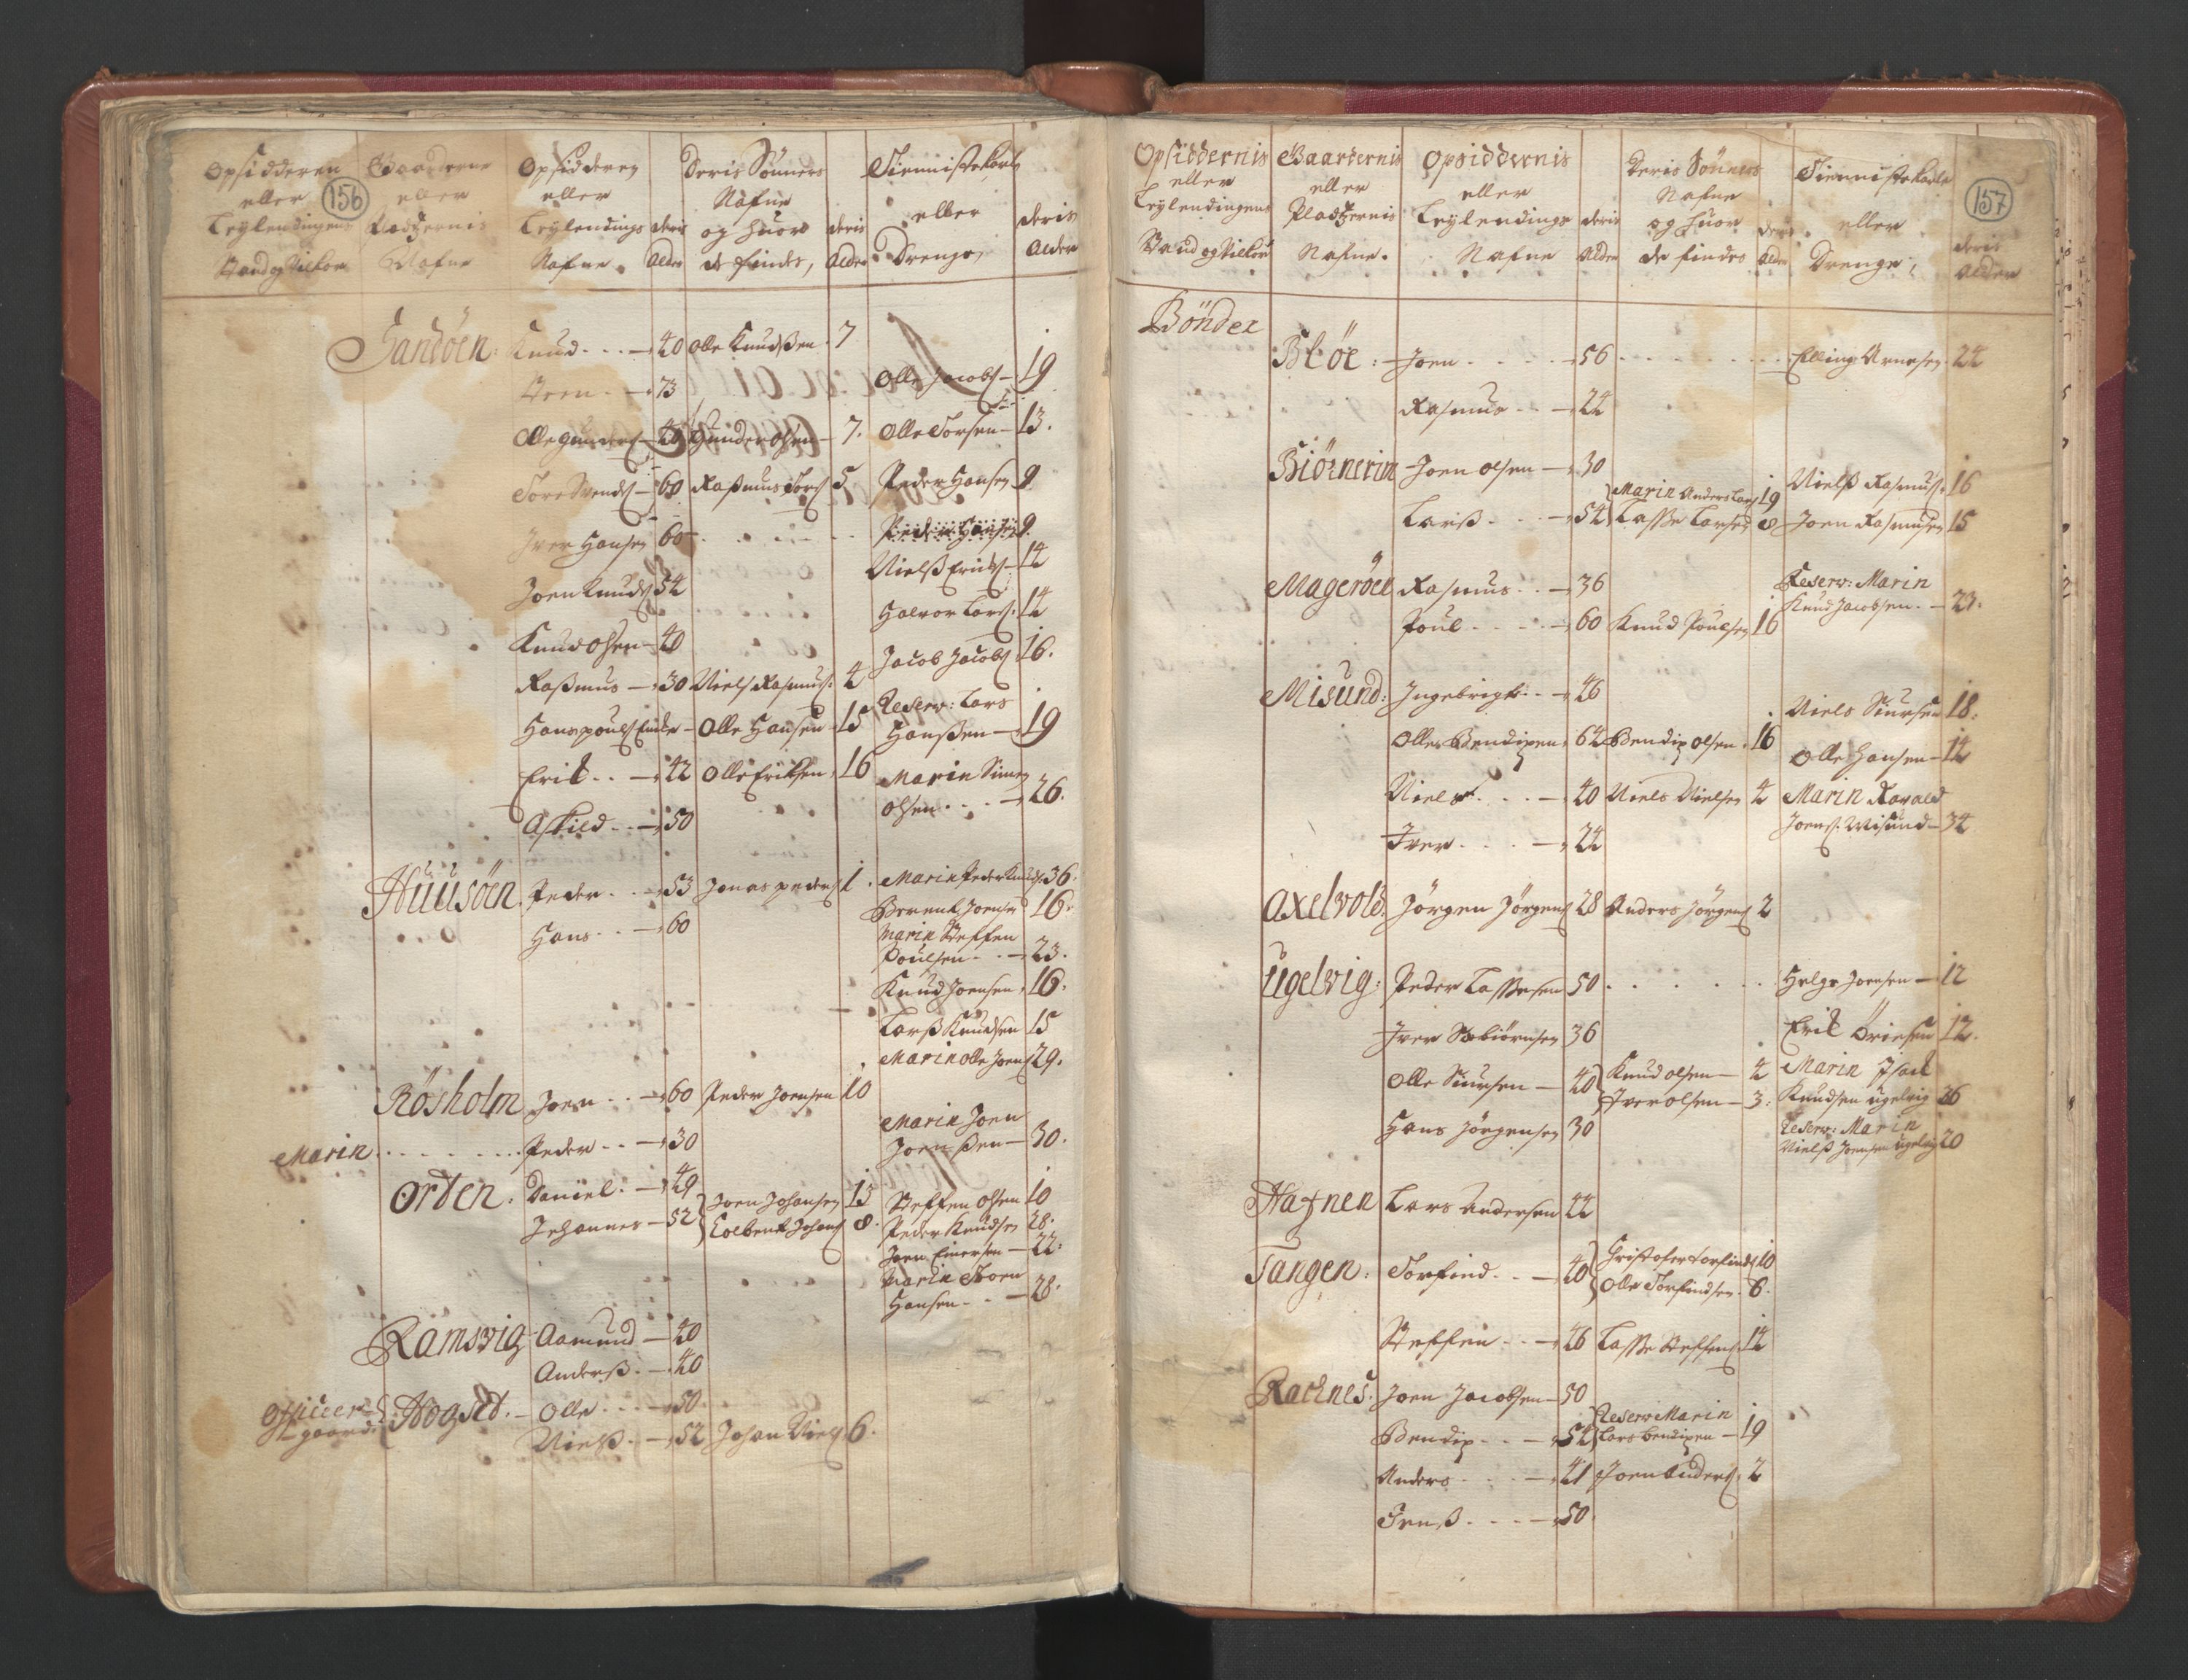 RA, Manntallet 1701, nr. 11: Nordmøre fogderi og Romsdal fogderi, 1701, s. 156-157